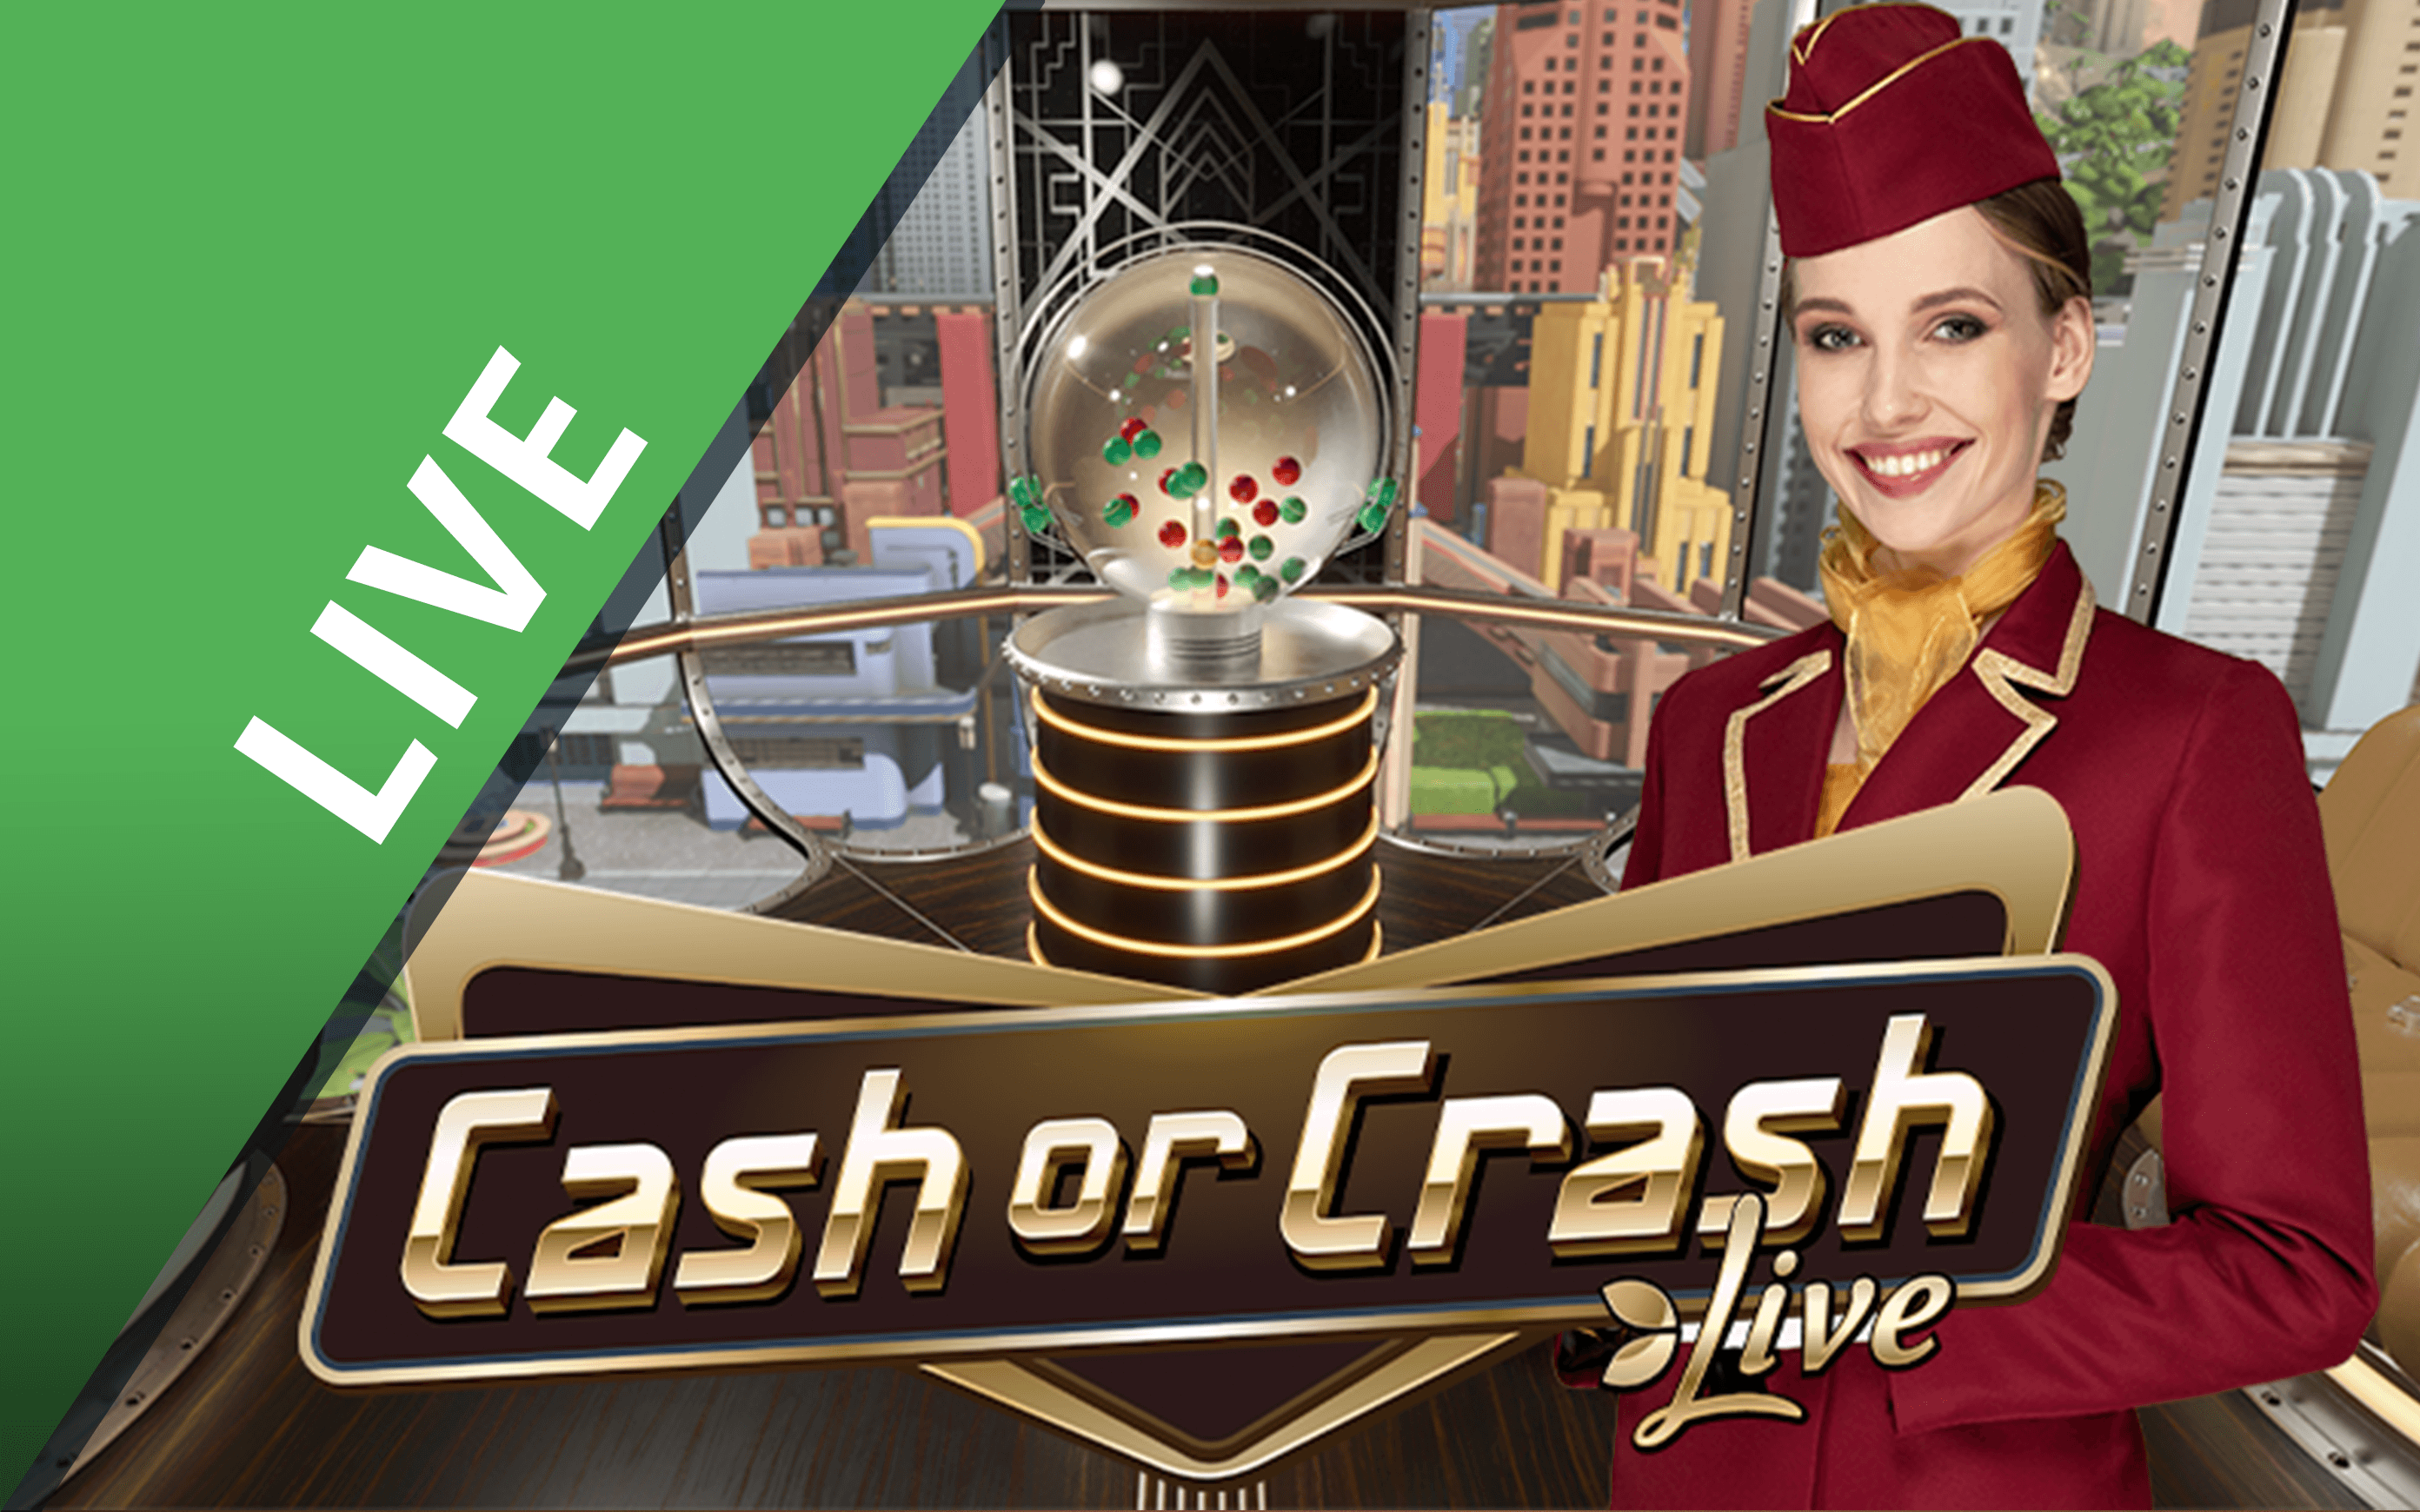 Joacă Cash or Crash în cazinoul online Starcasino.be